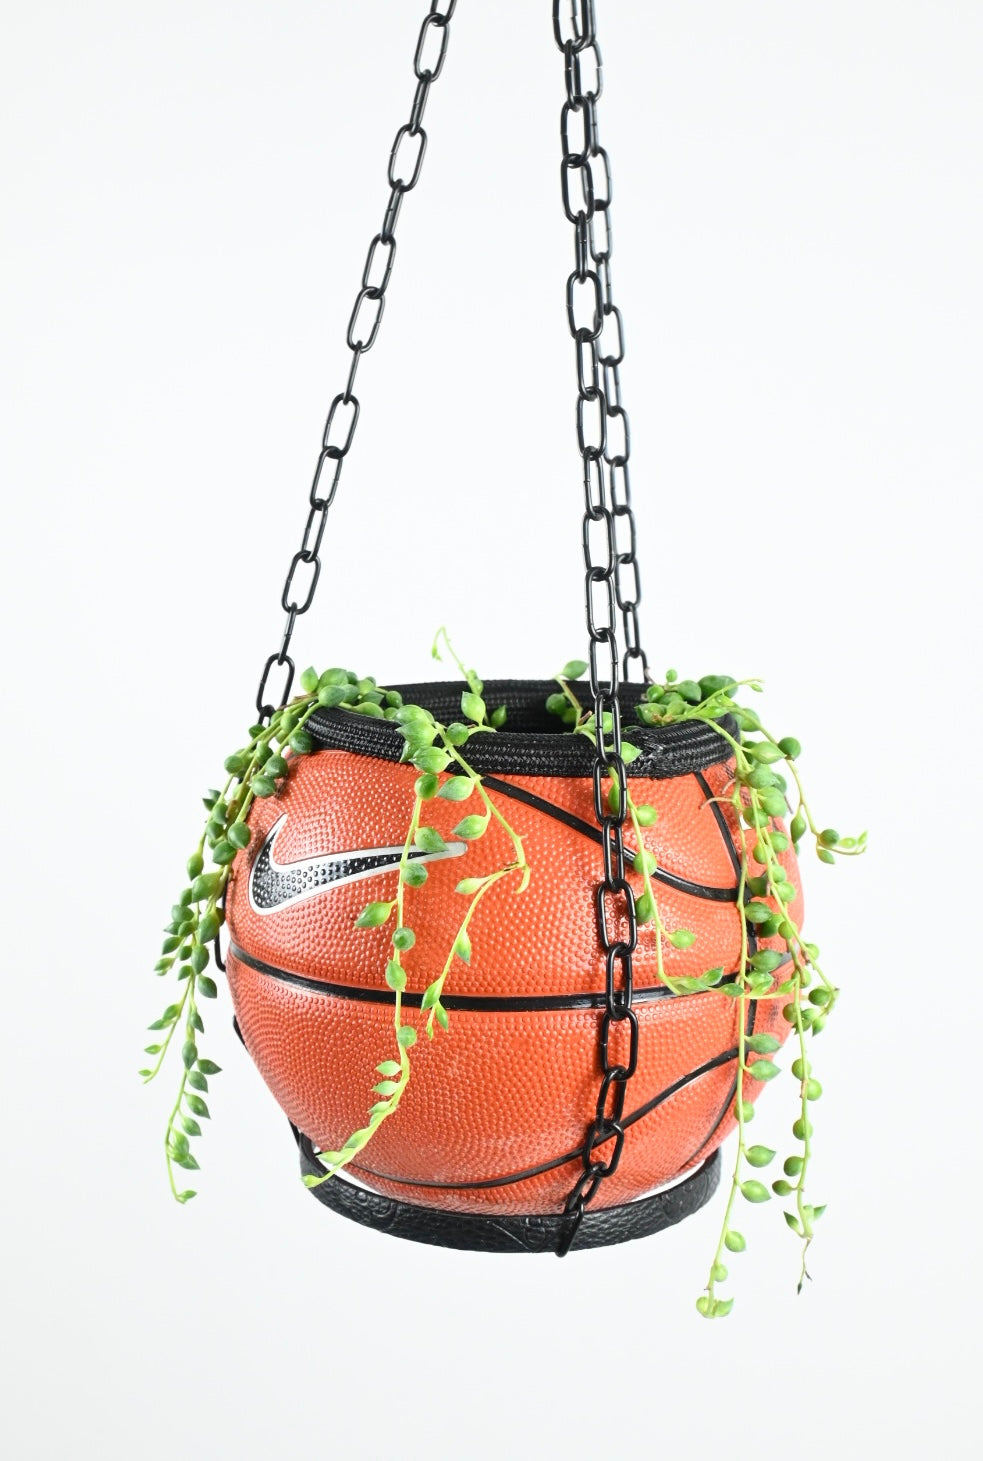 Hanging Planter Basketball